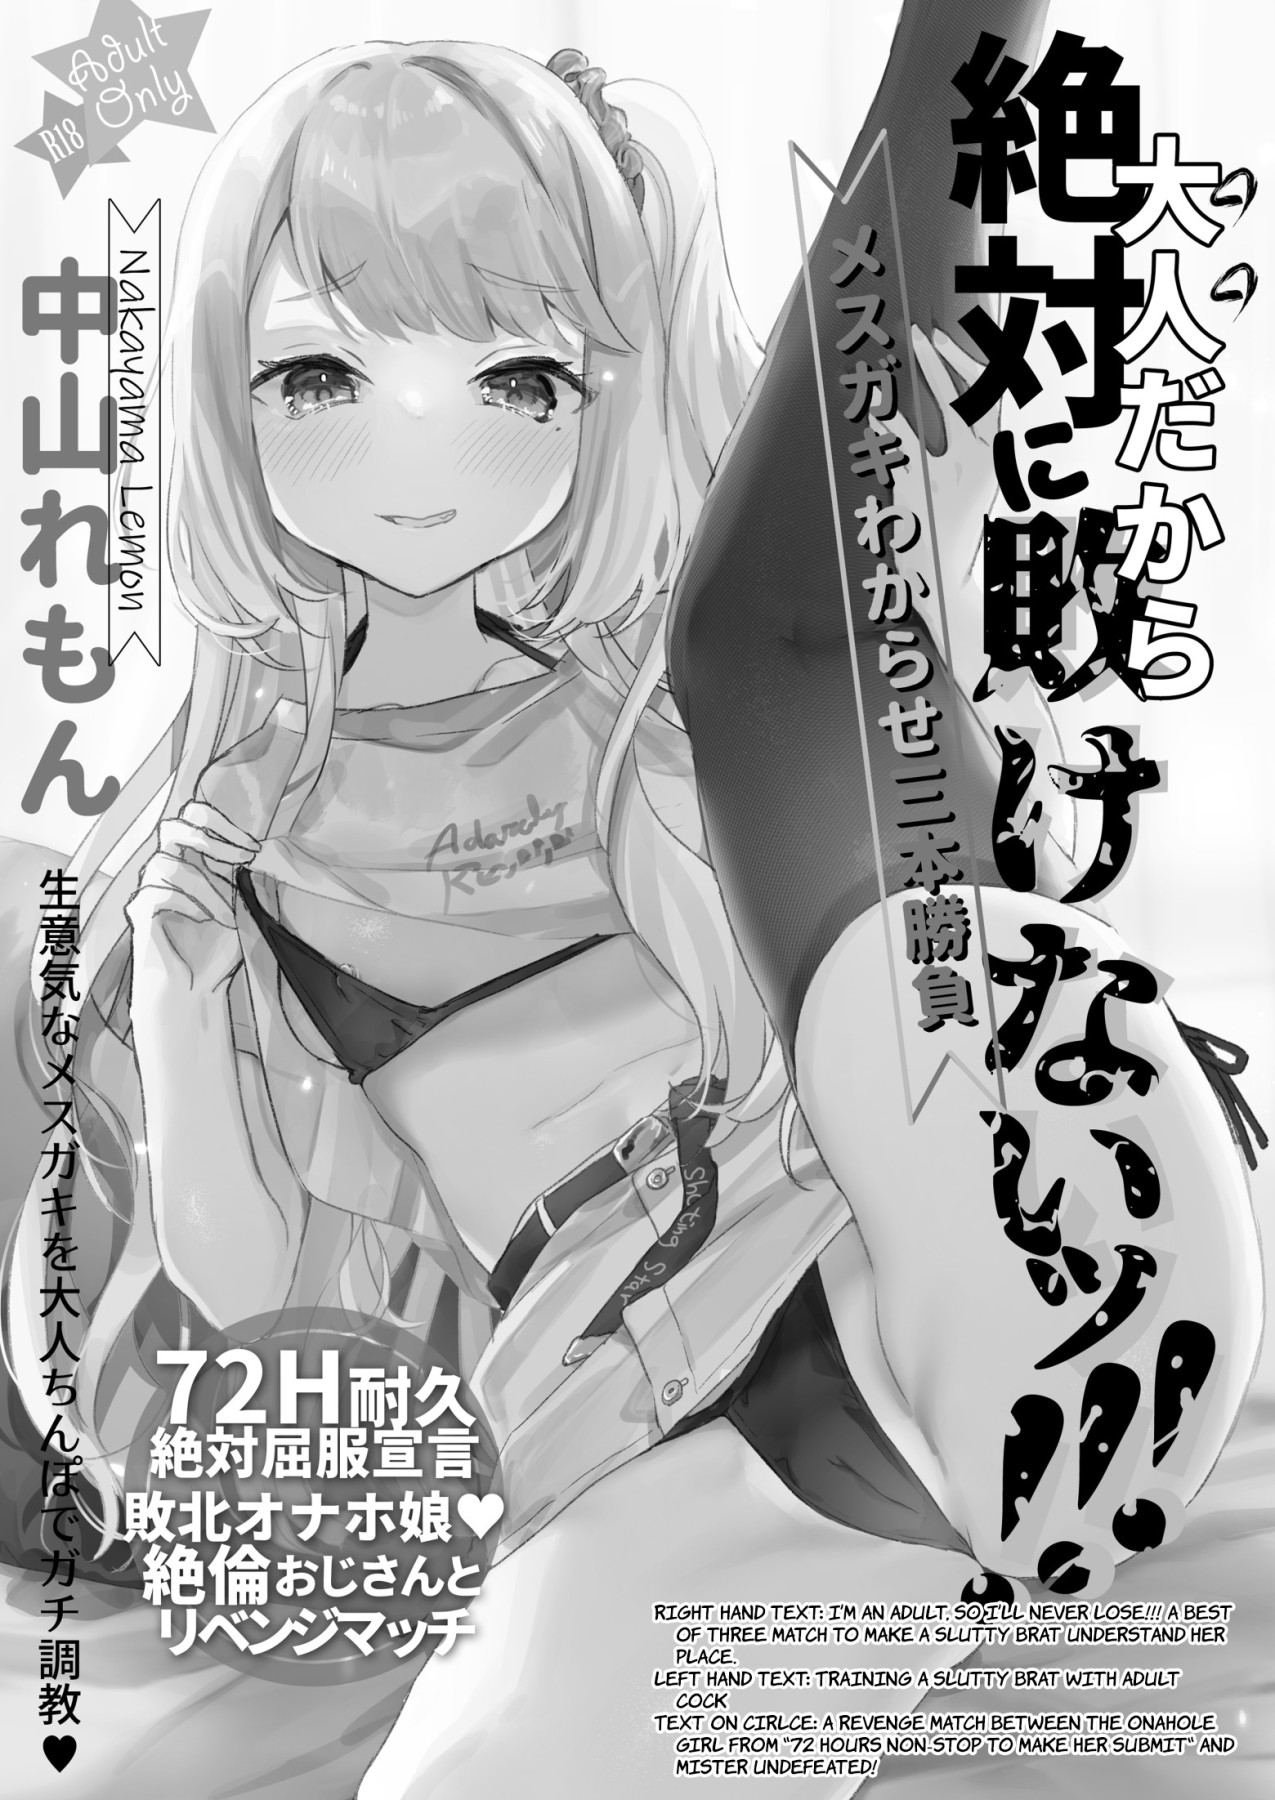 Hentai Manga Comic-I'm An Adult, So I'll Never Lose!!!-Read-2